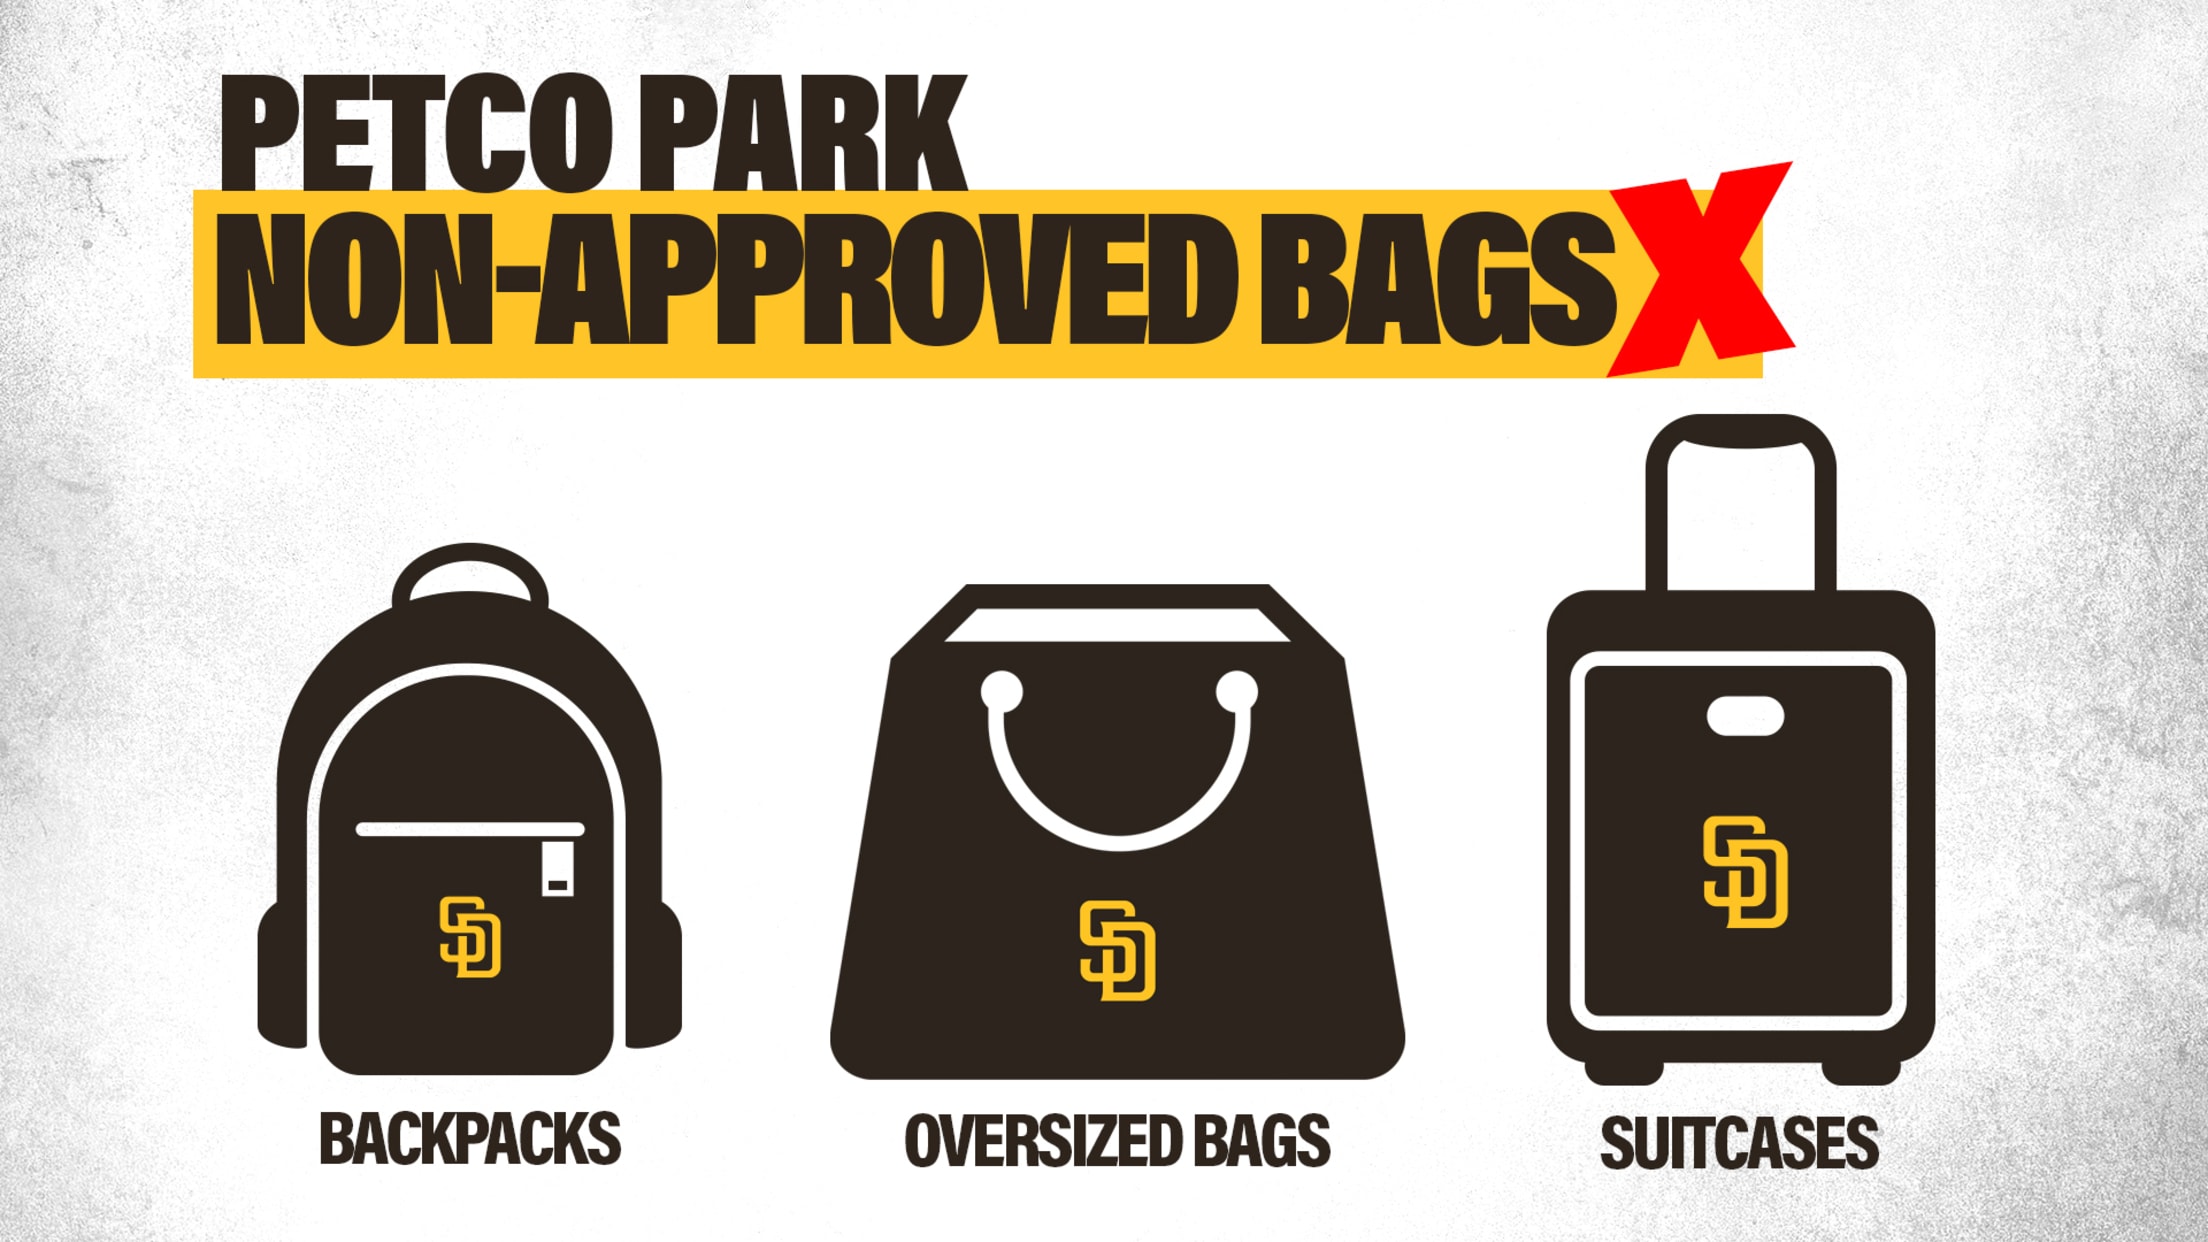 Petco Park Policies and Procedures San Diego Padres